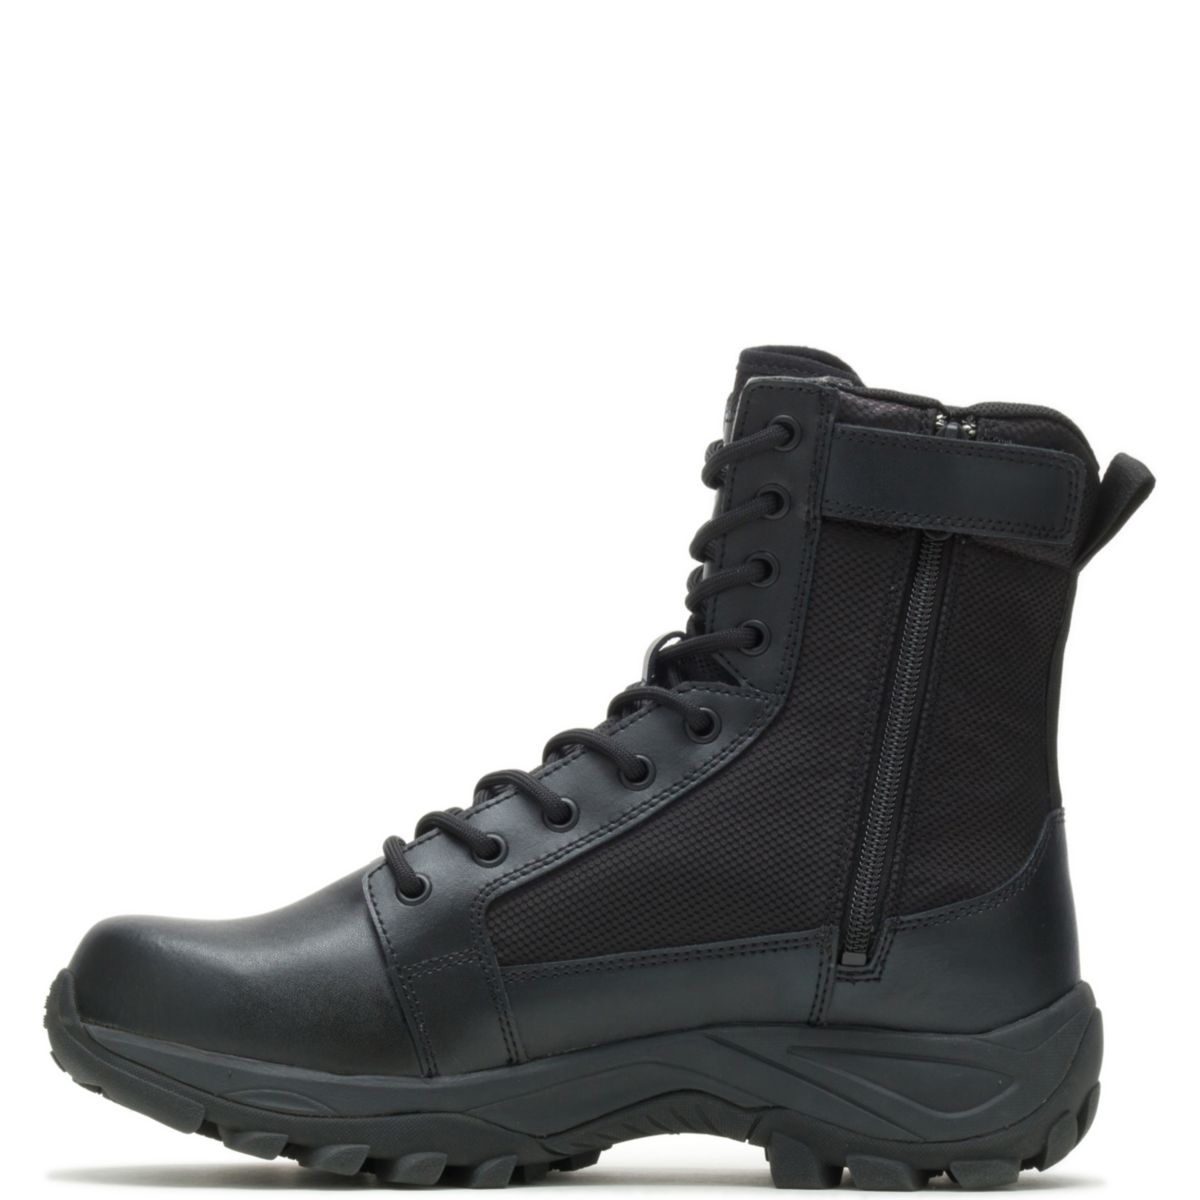 Bates Men's Fuse 8-inch Side Zip Waterproof Boot Black - E06508 BLACK - BLACK, 11.5